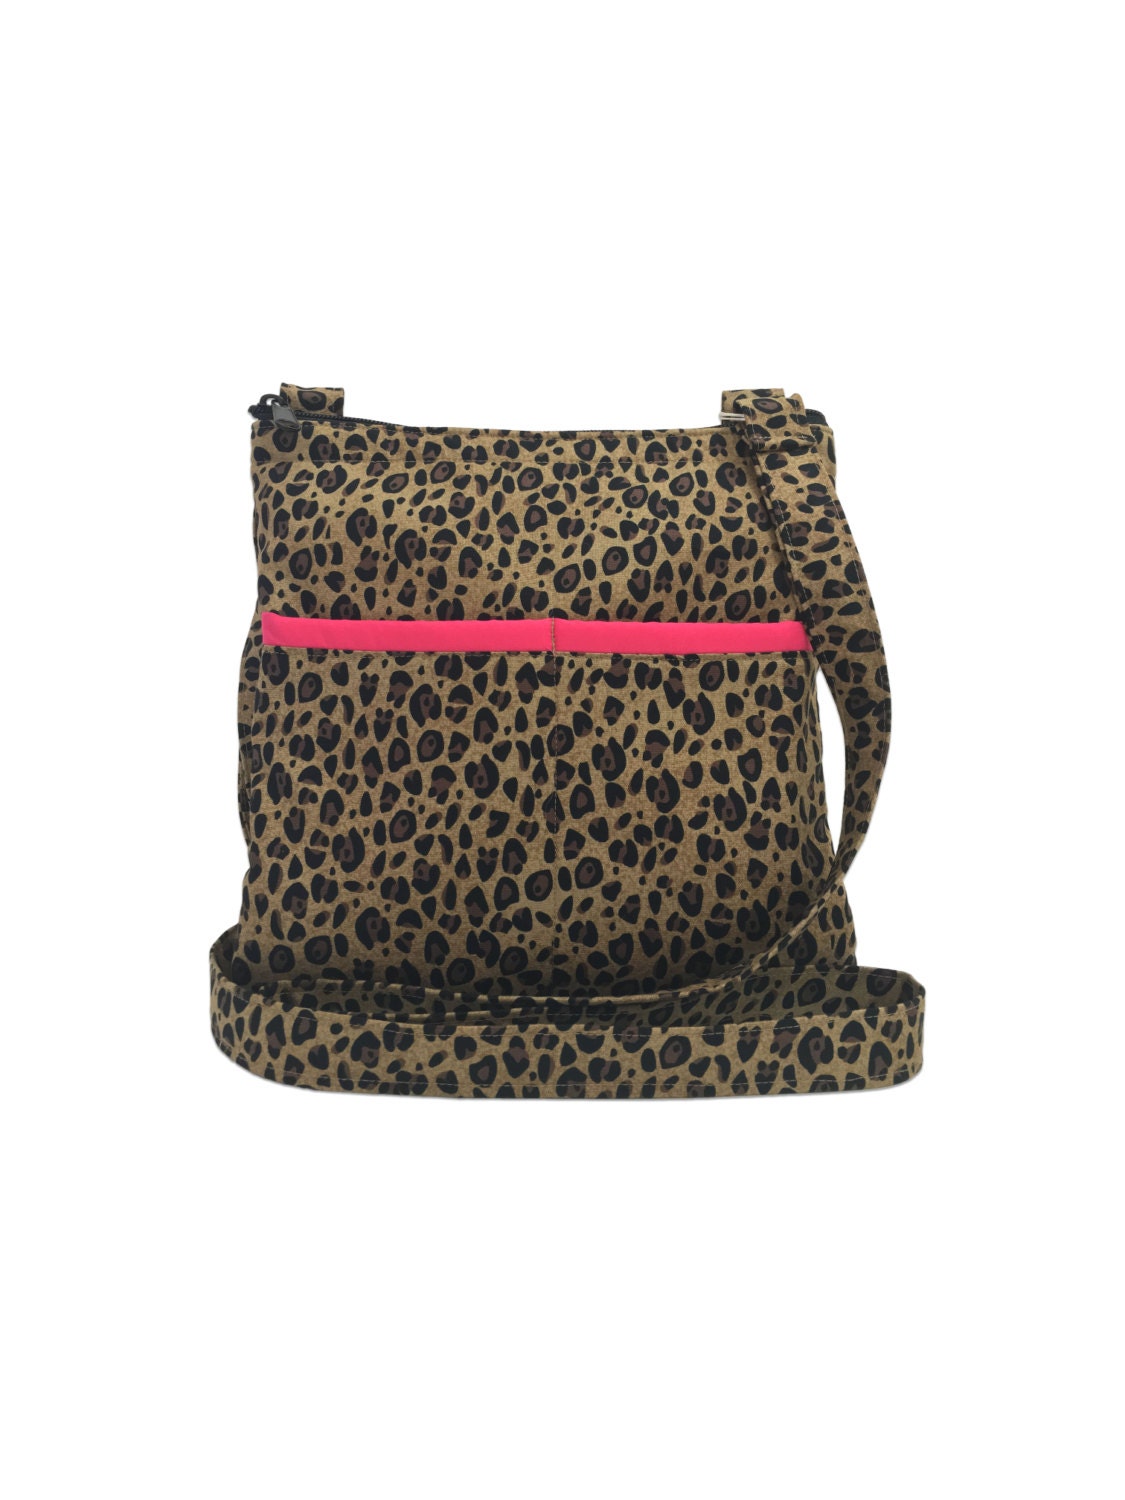 Leopard Print Crossbody Bag // Sling Bag // Crossbody Purse